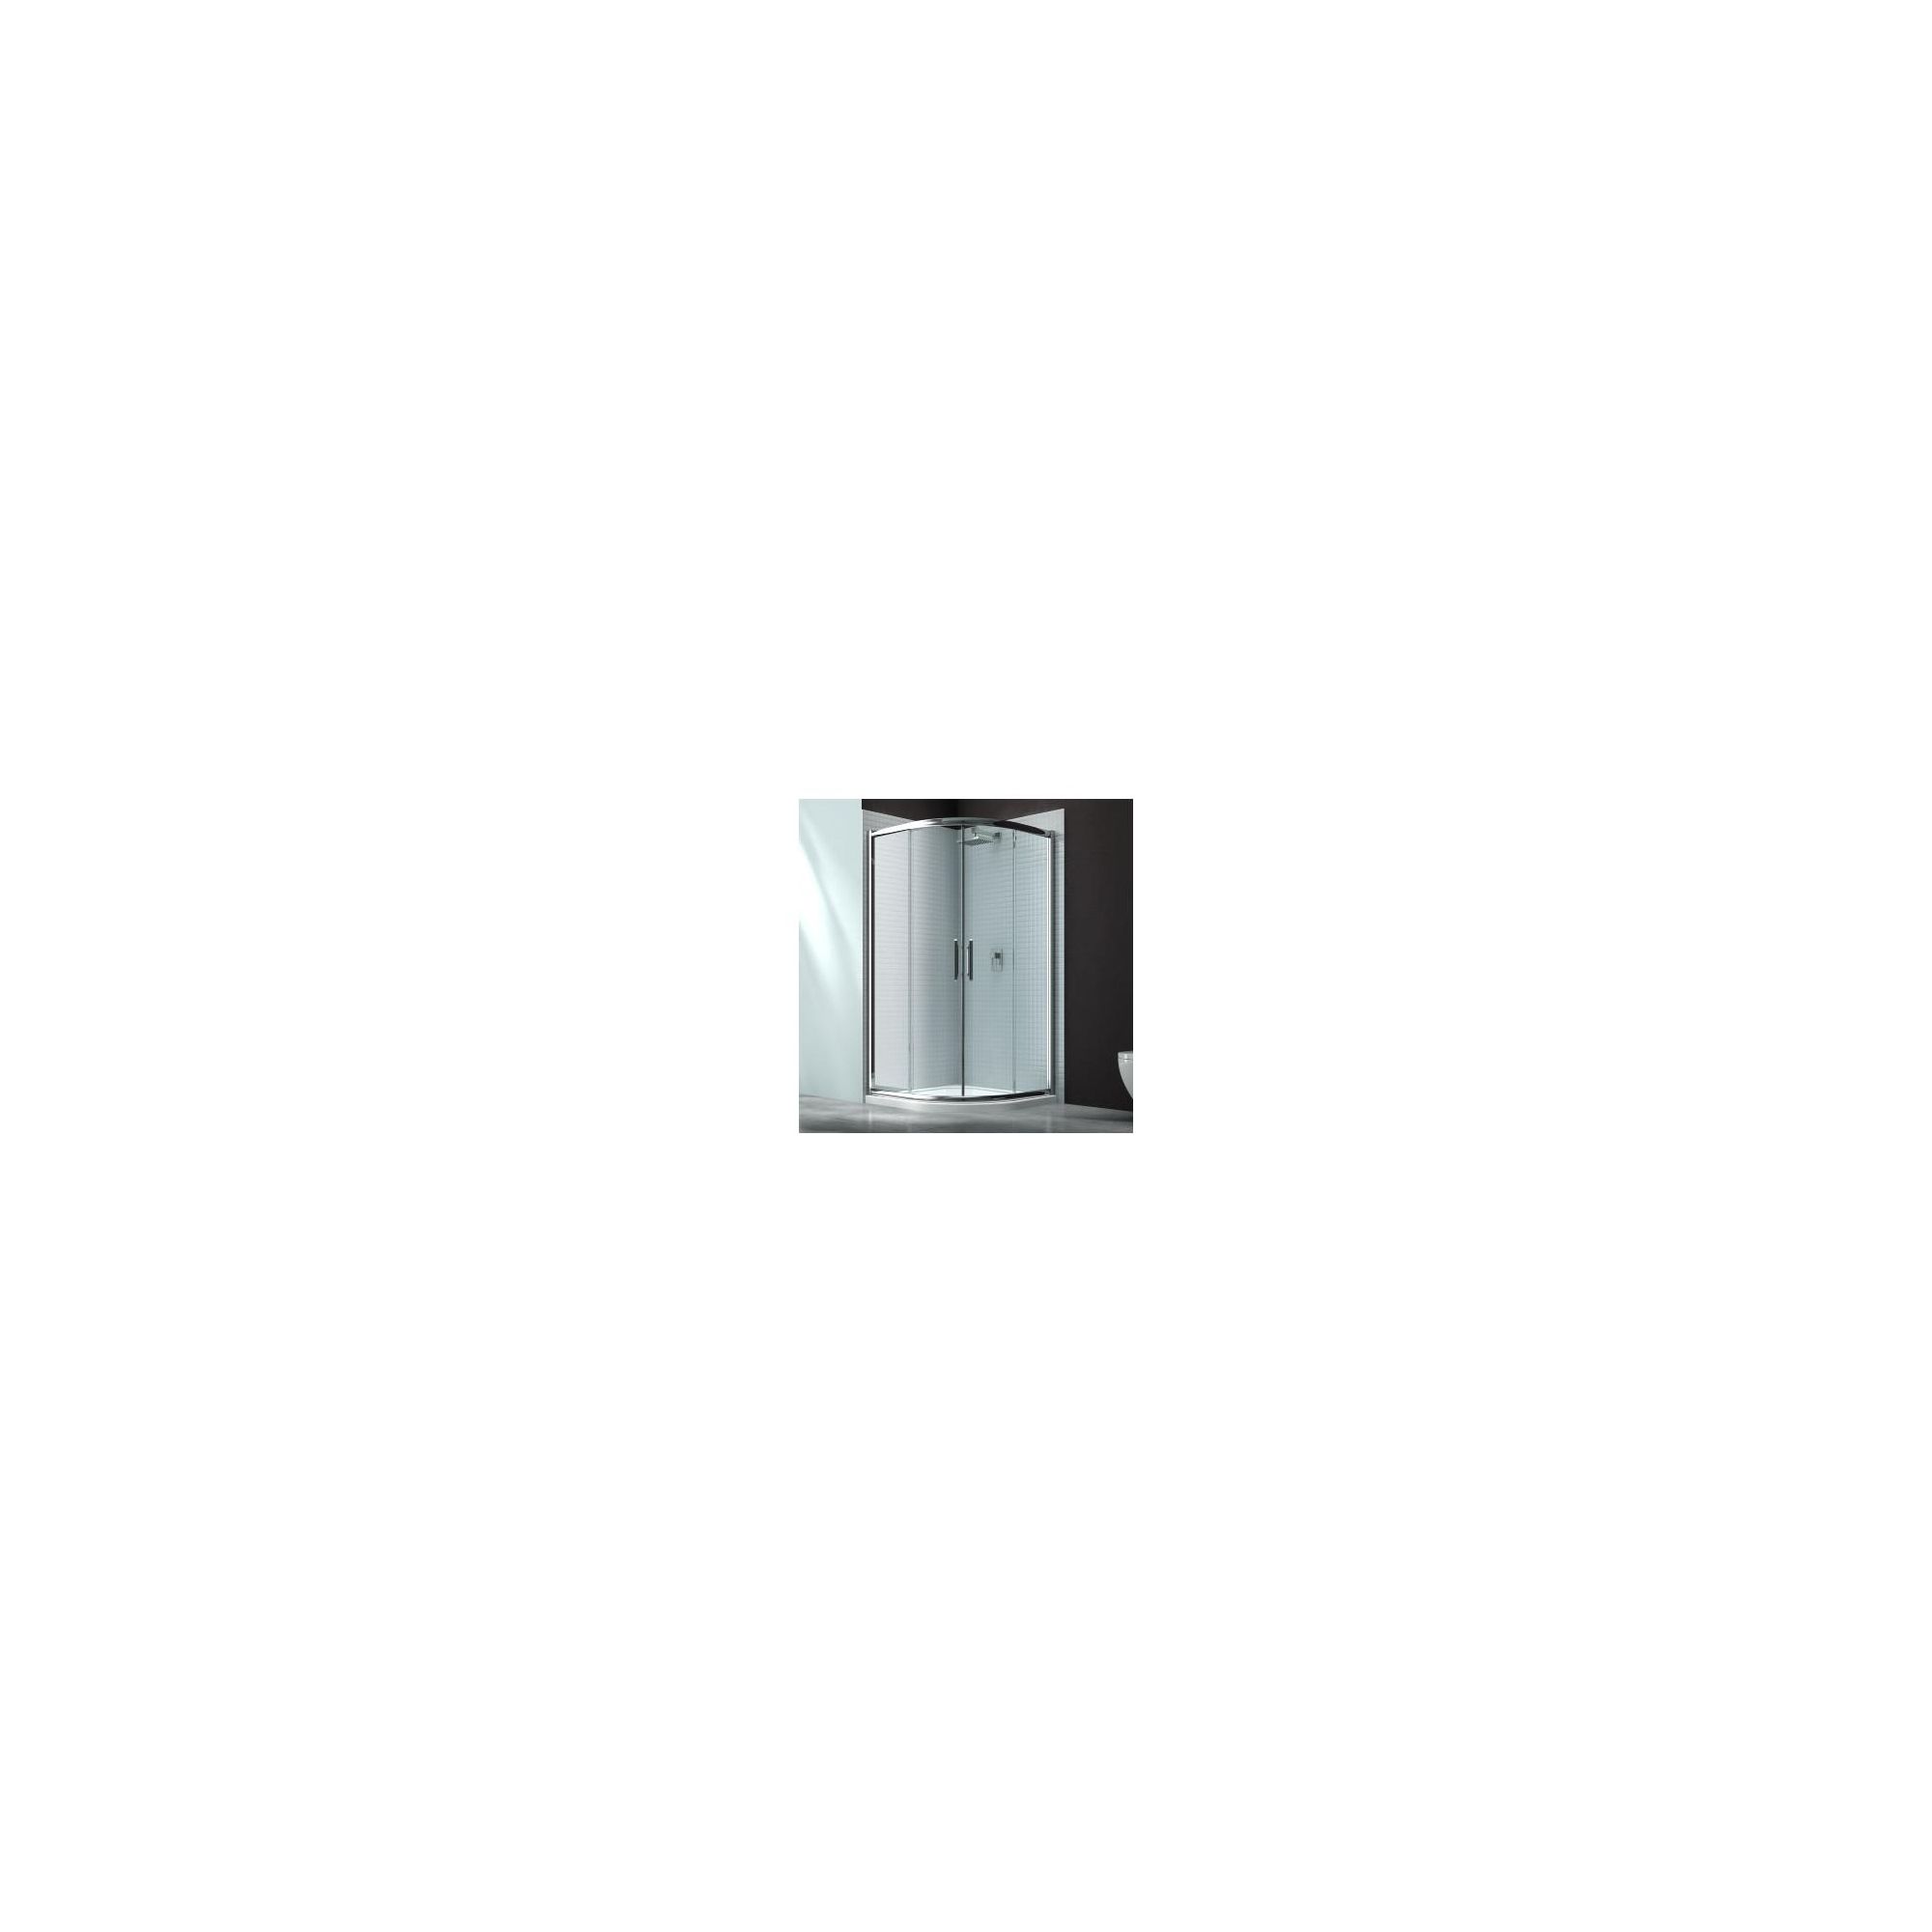 Merlyn Series 6 Double Quadrant Shower Door, 800mm x 800mm, Chrome Frame, 6mm Glass at Tesco Direct